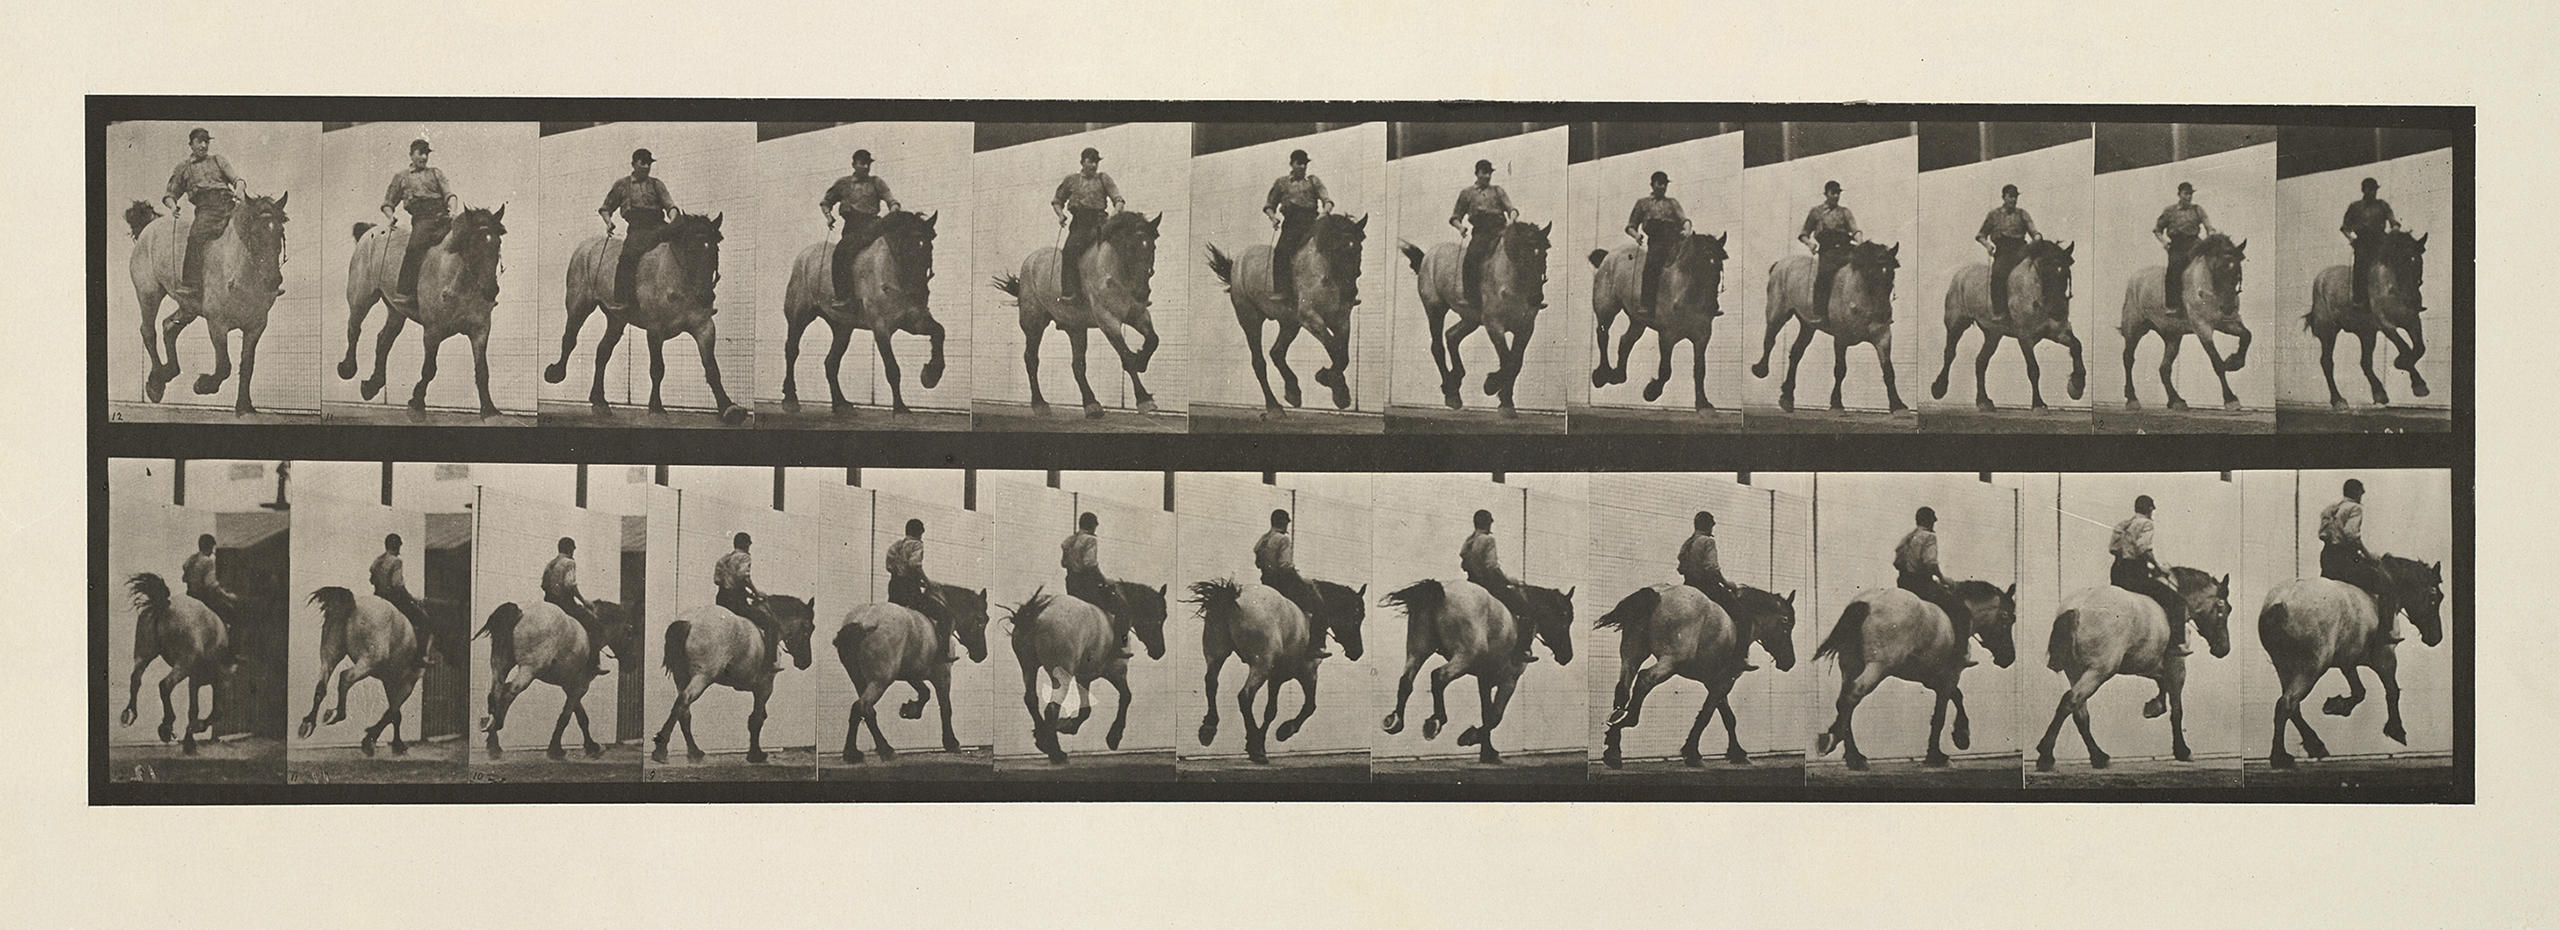 A series of black and white photos show a man riding a horse